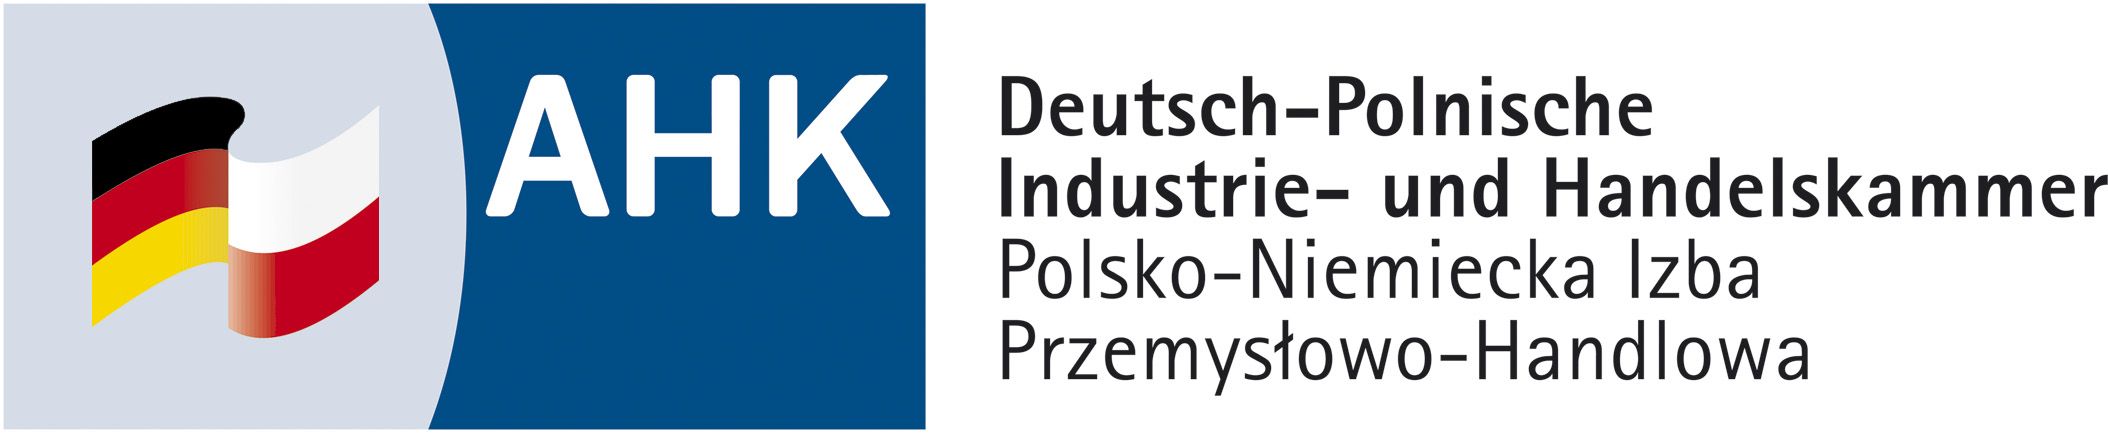 Membership in the Polish-German Chamber AHK Poland